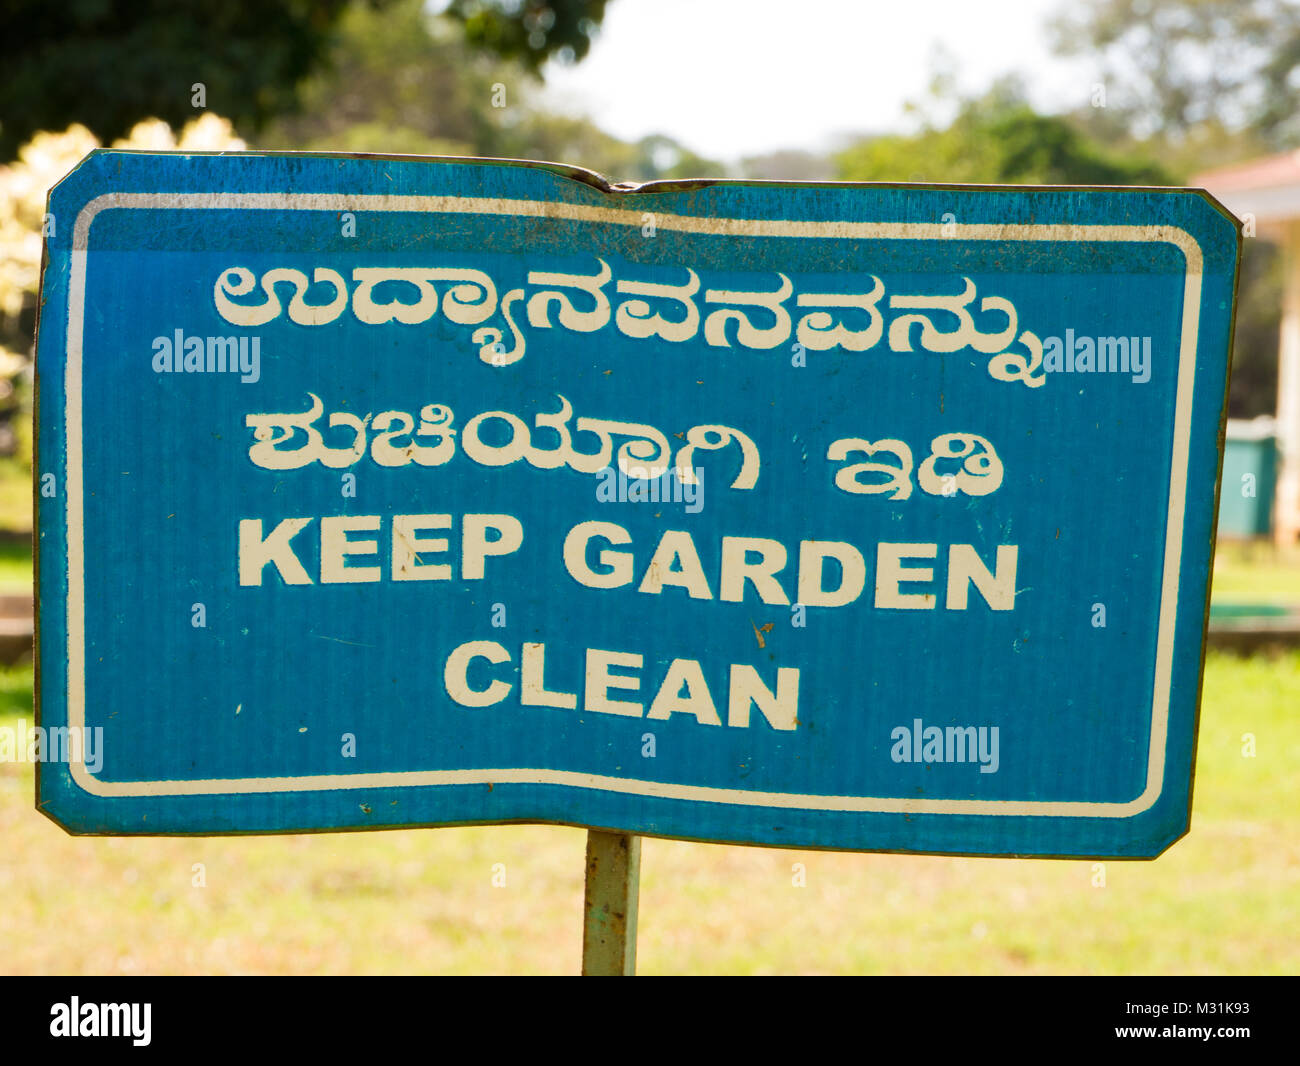 Keep the garden clean at Mysore, India. Stock Photo